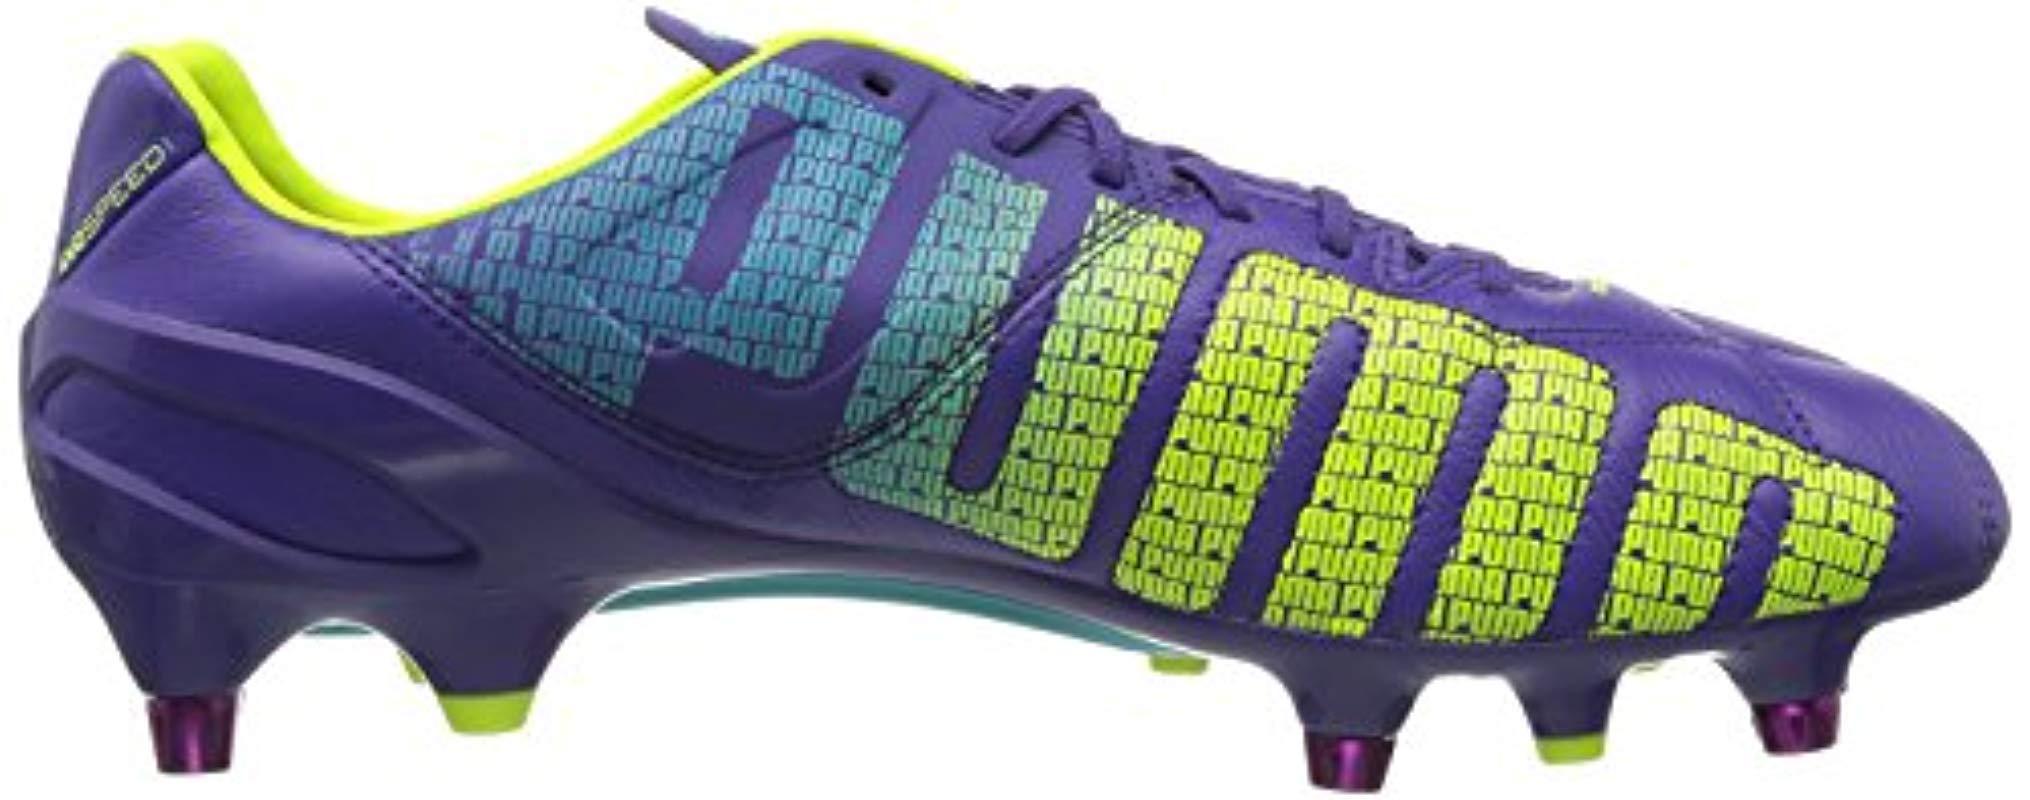 PUMA Evospeed 1.3 Lth Fg Football Boots in Purple for Men - Save 64% | Lyst  UK